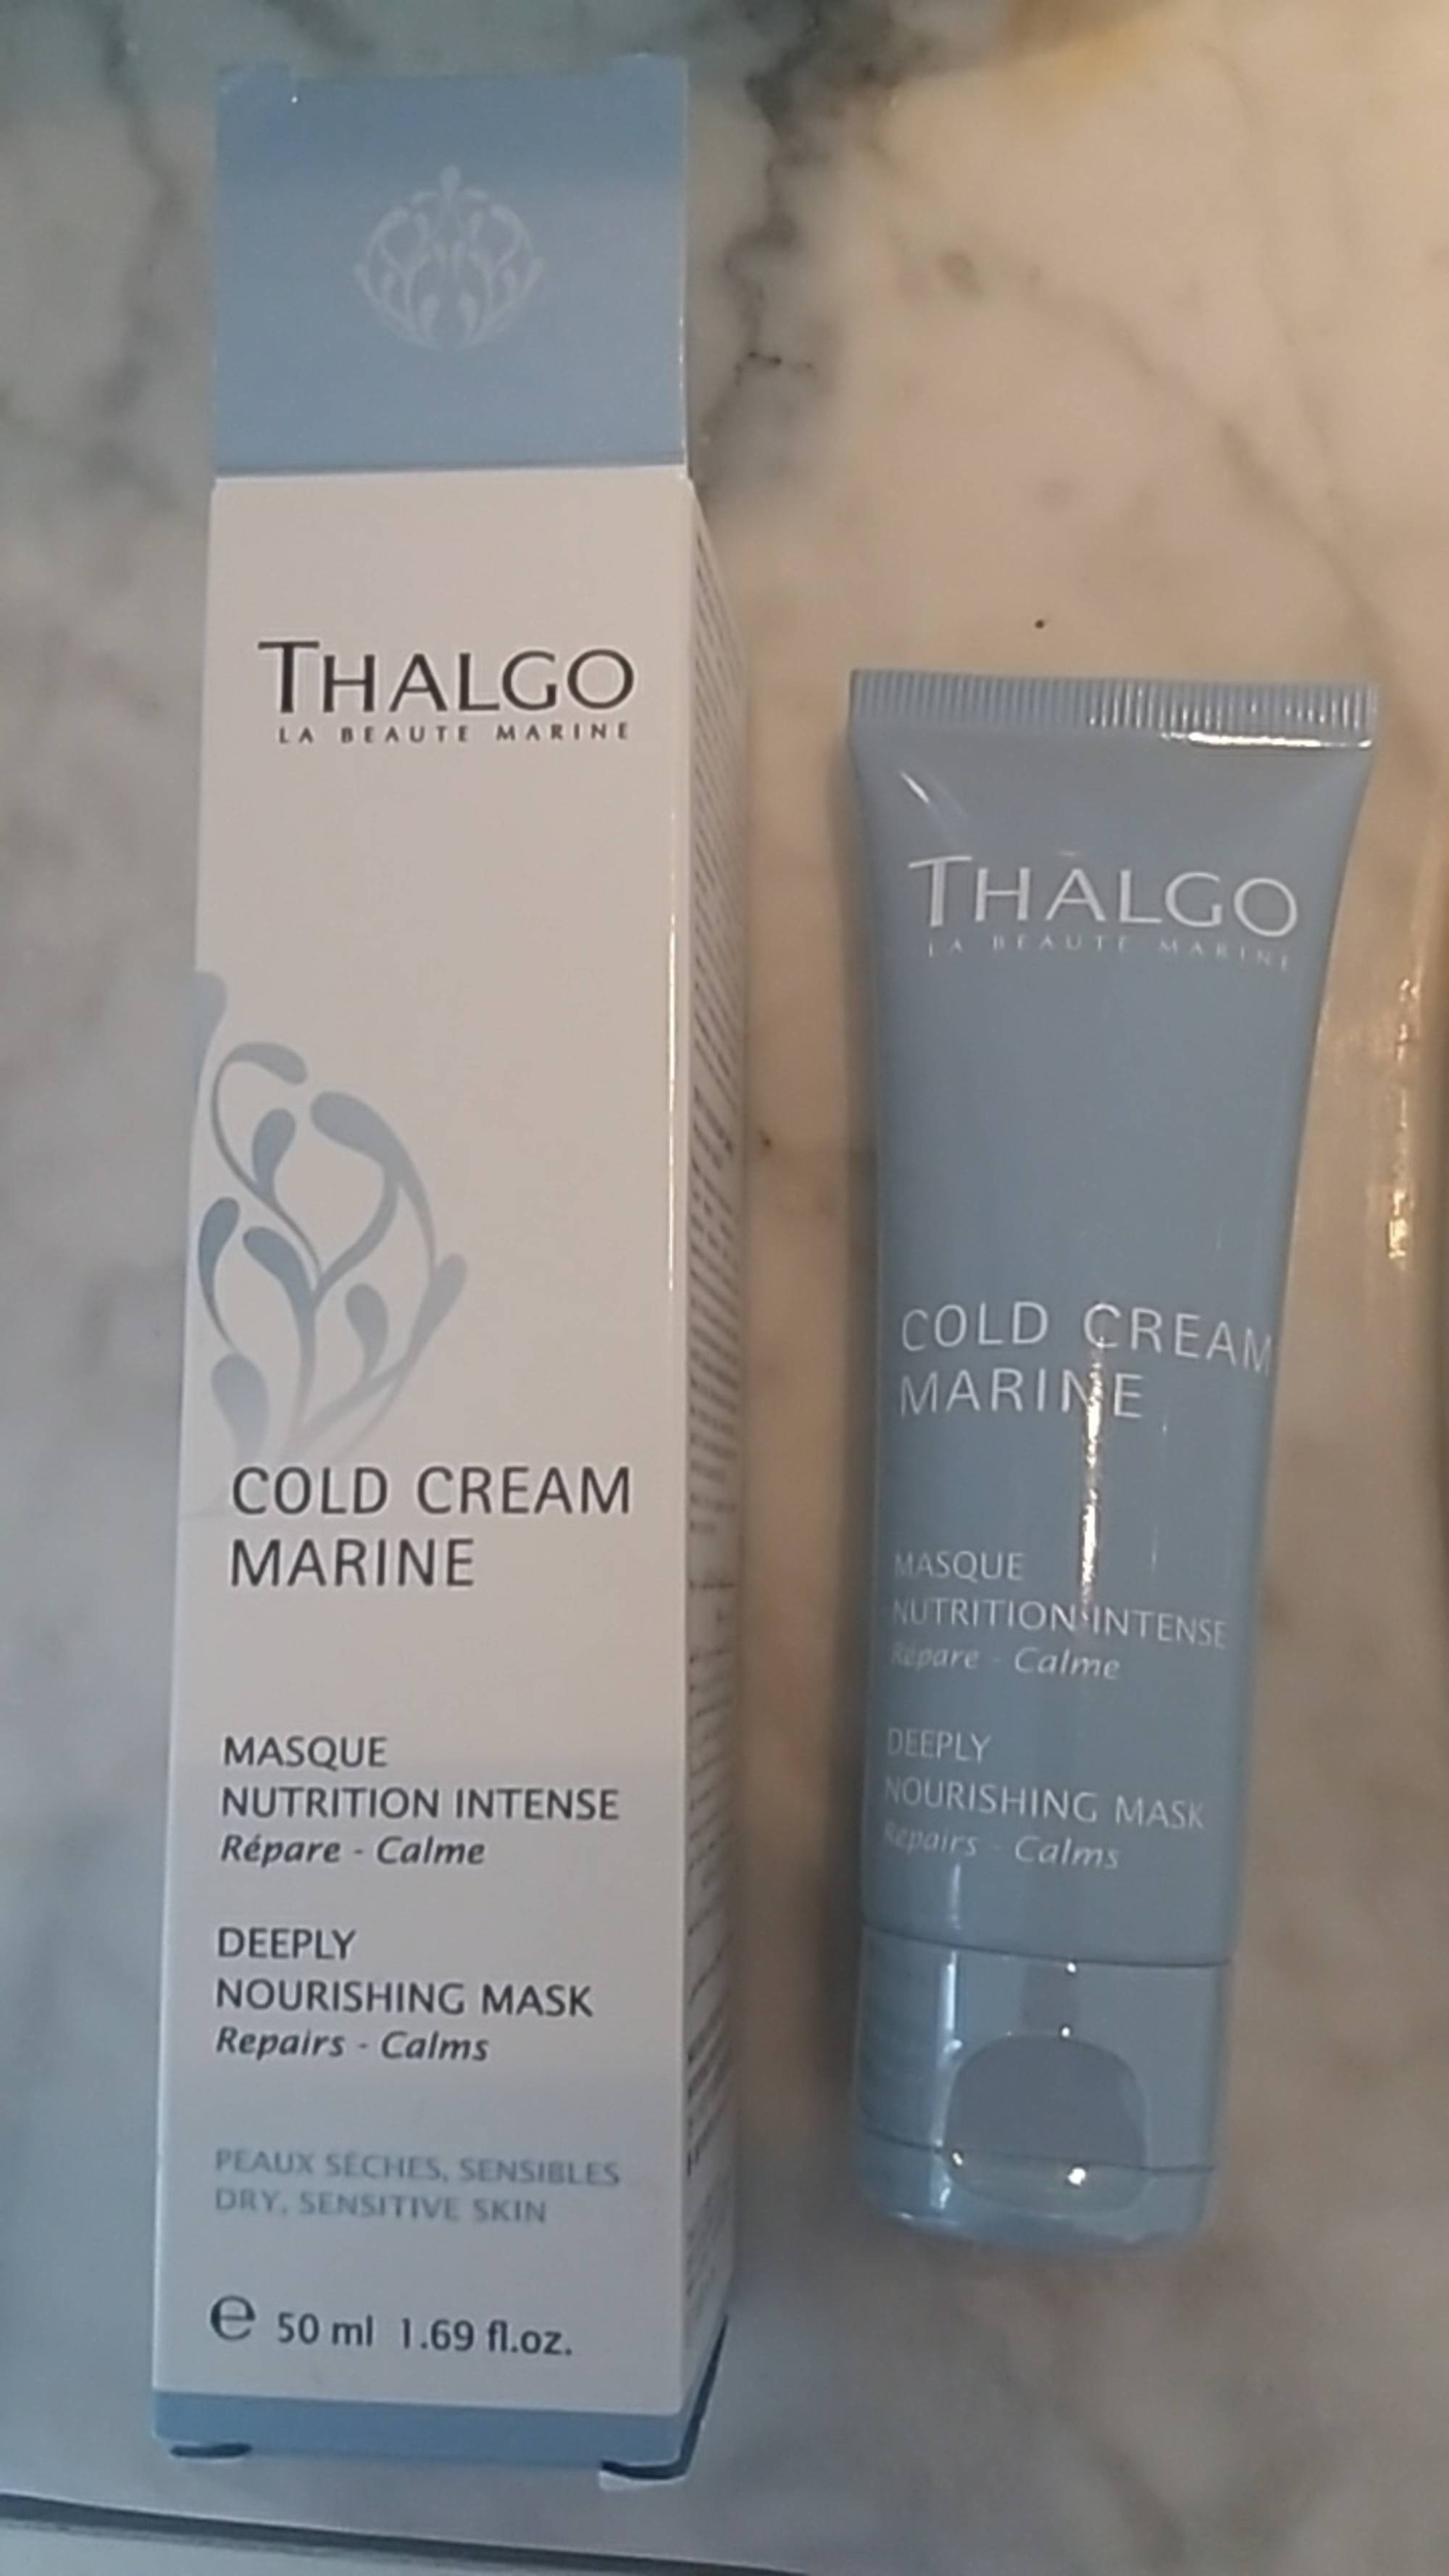 THALGO - Cold cream marine - Masque nutrition intense